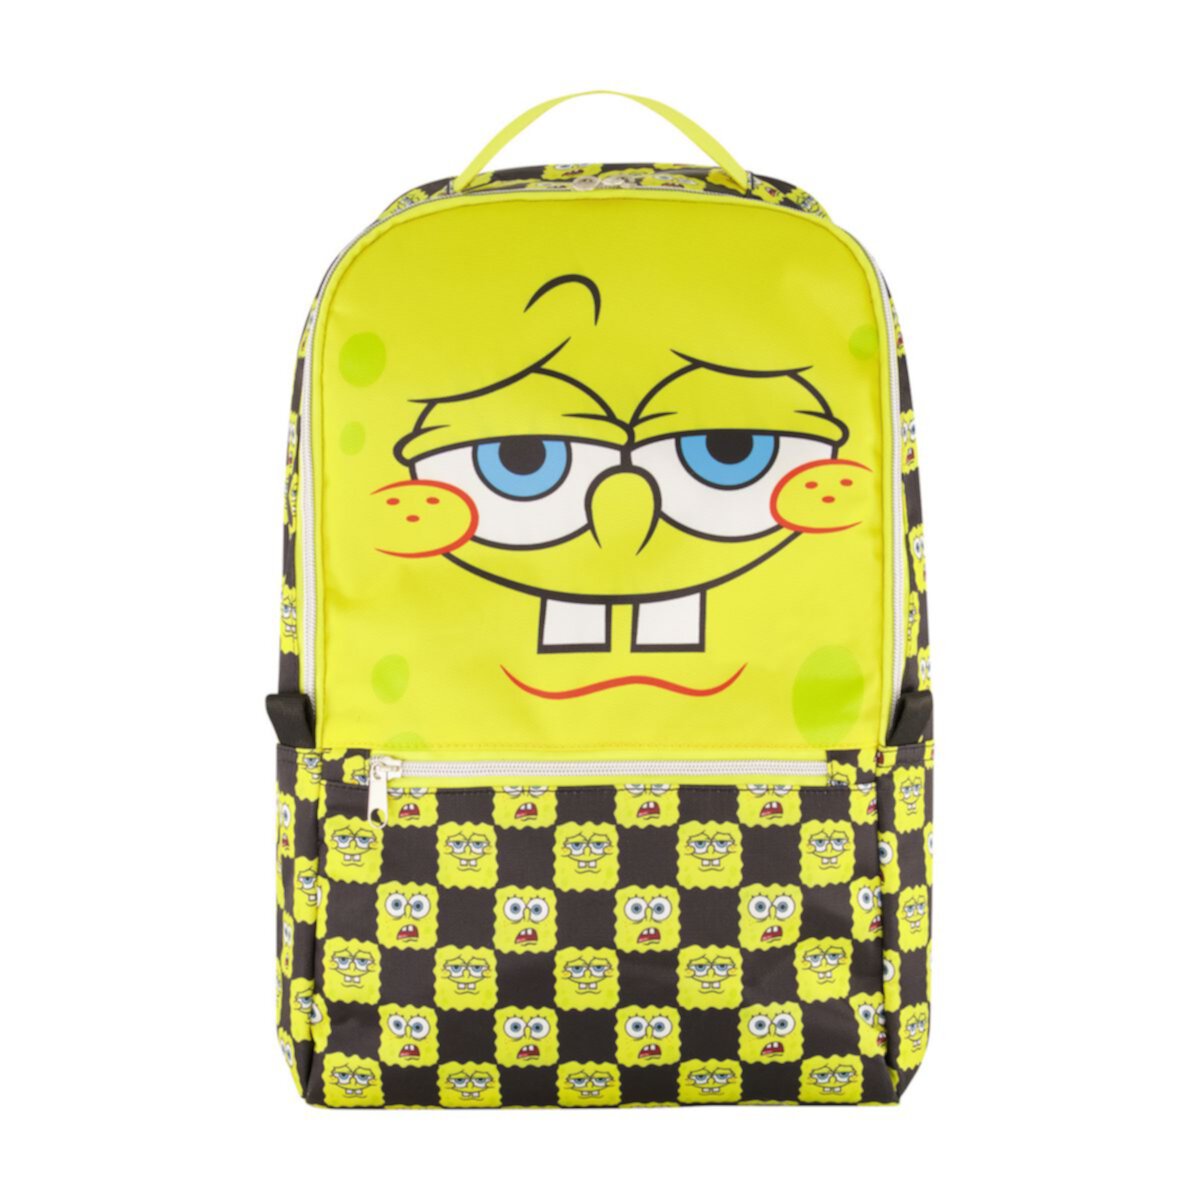 Nickelodeon SpongeBob SquarePants Checkered Face Backpack FUL